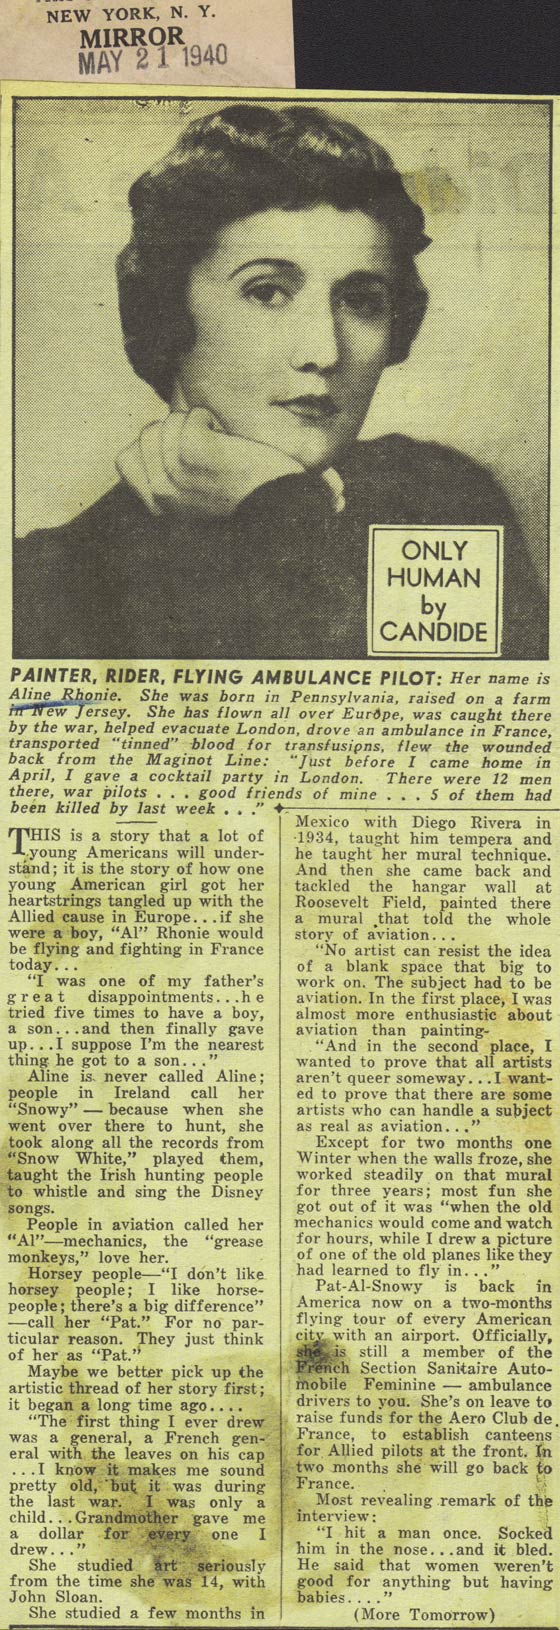 New York Mirror, May 21, 1940 (Source: Roberts)